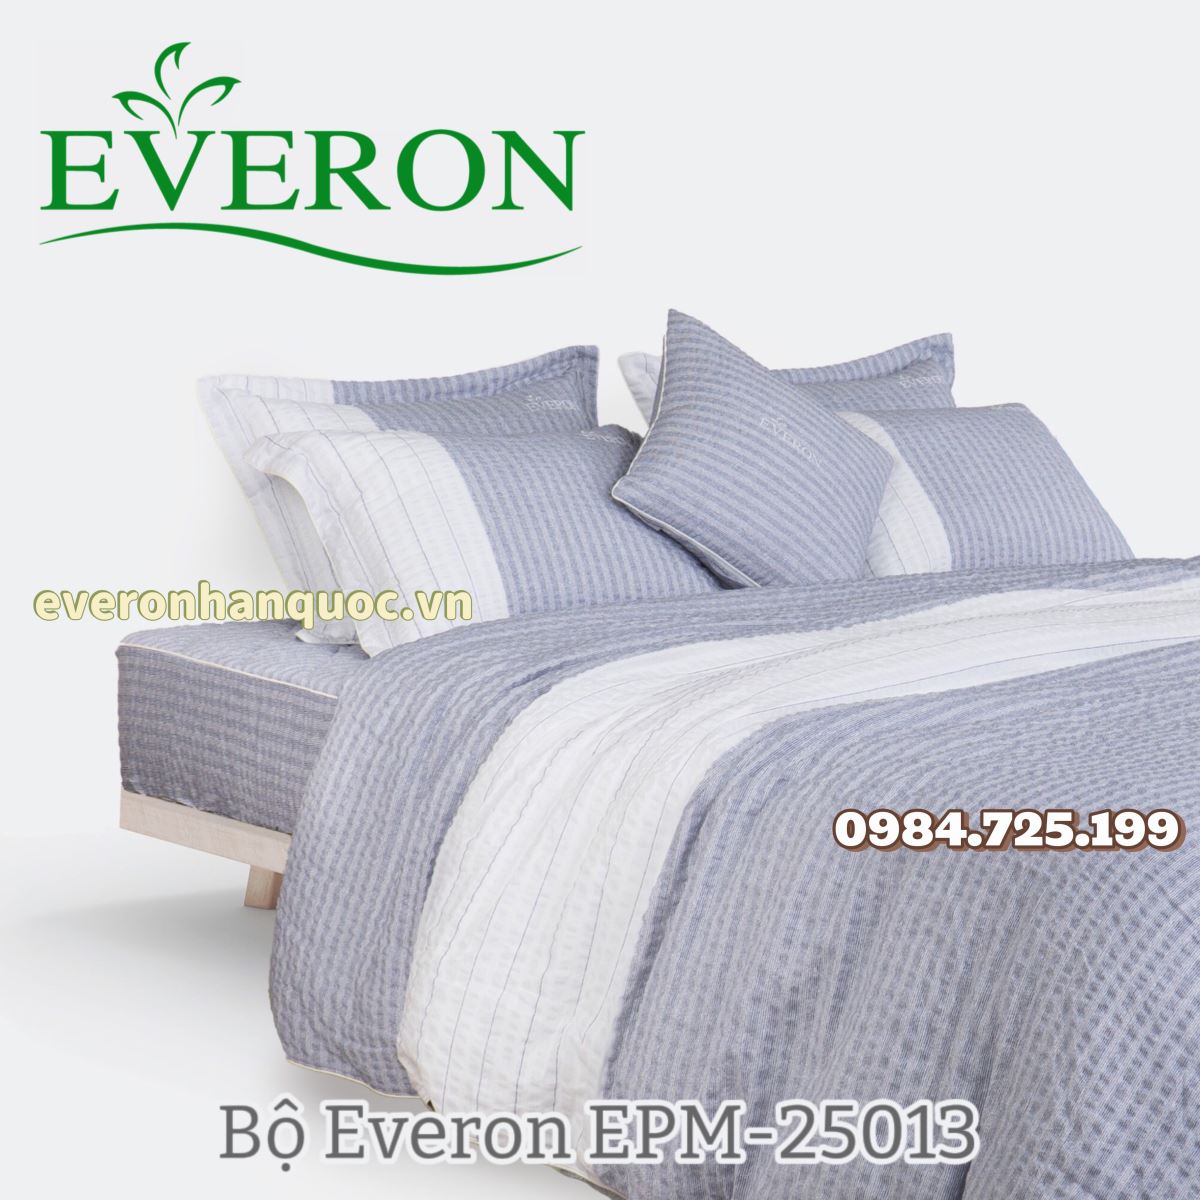 Bộ Everon EPM-25013